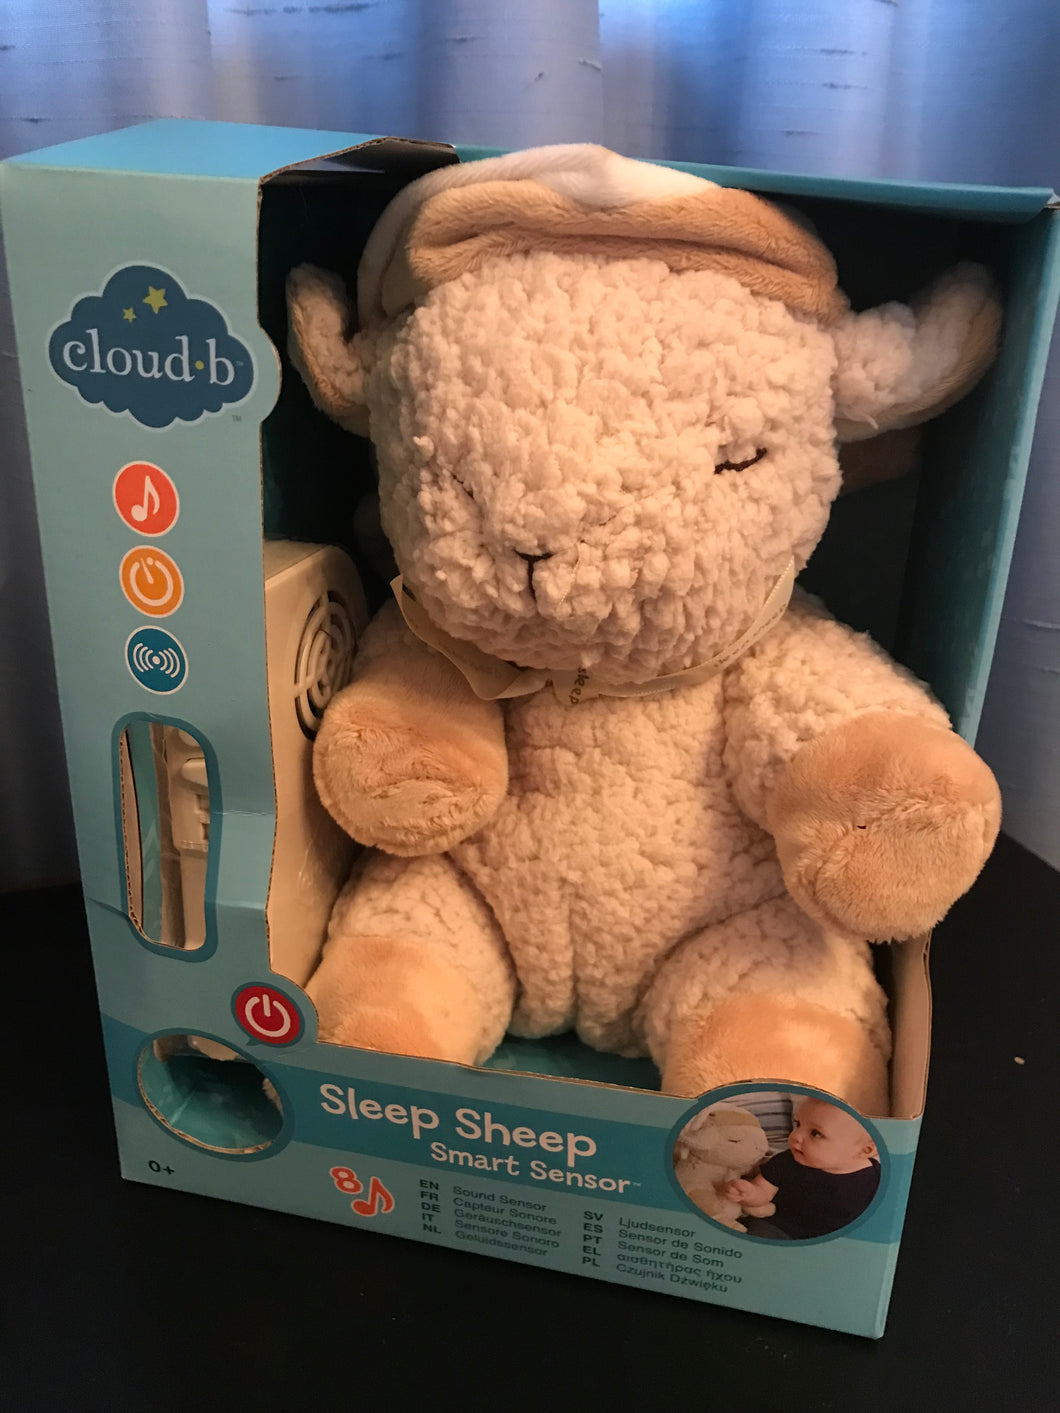 Cloud b, Sleep Sheep, smart sensor